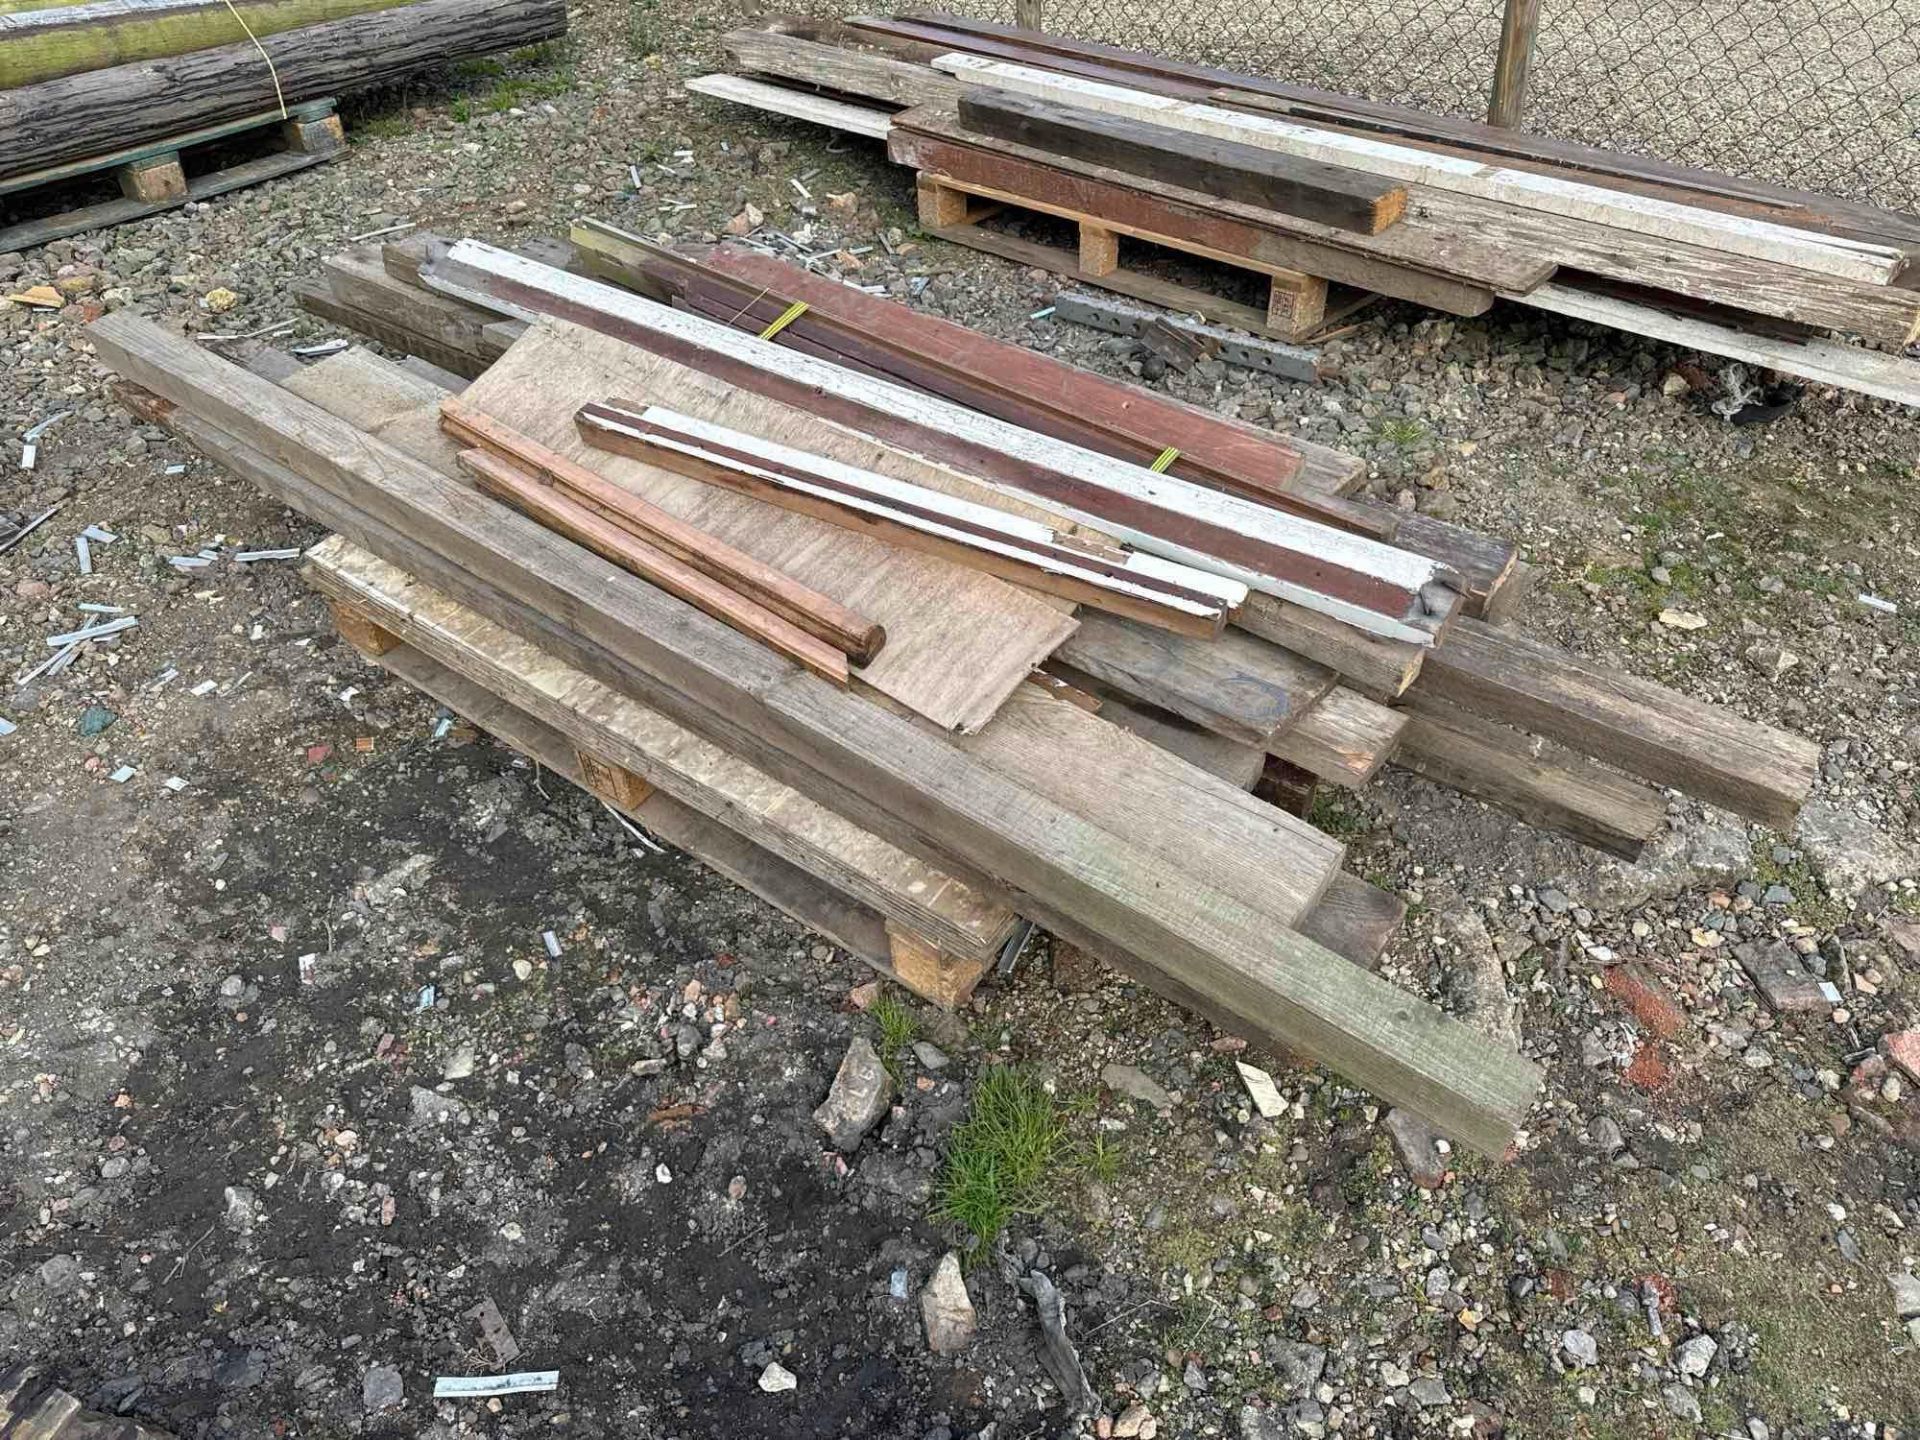 Quantity timber lengths